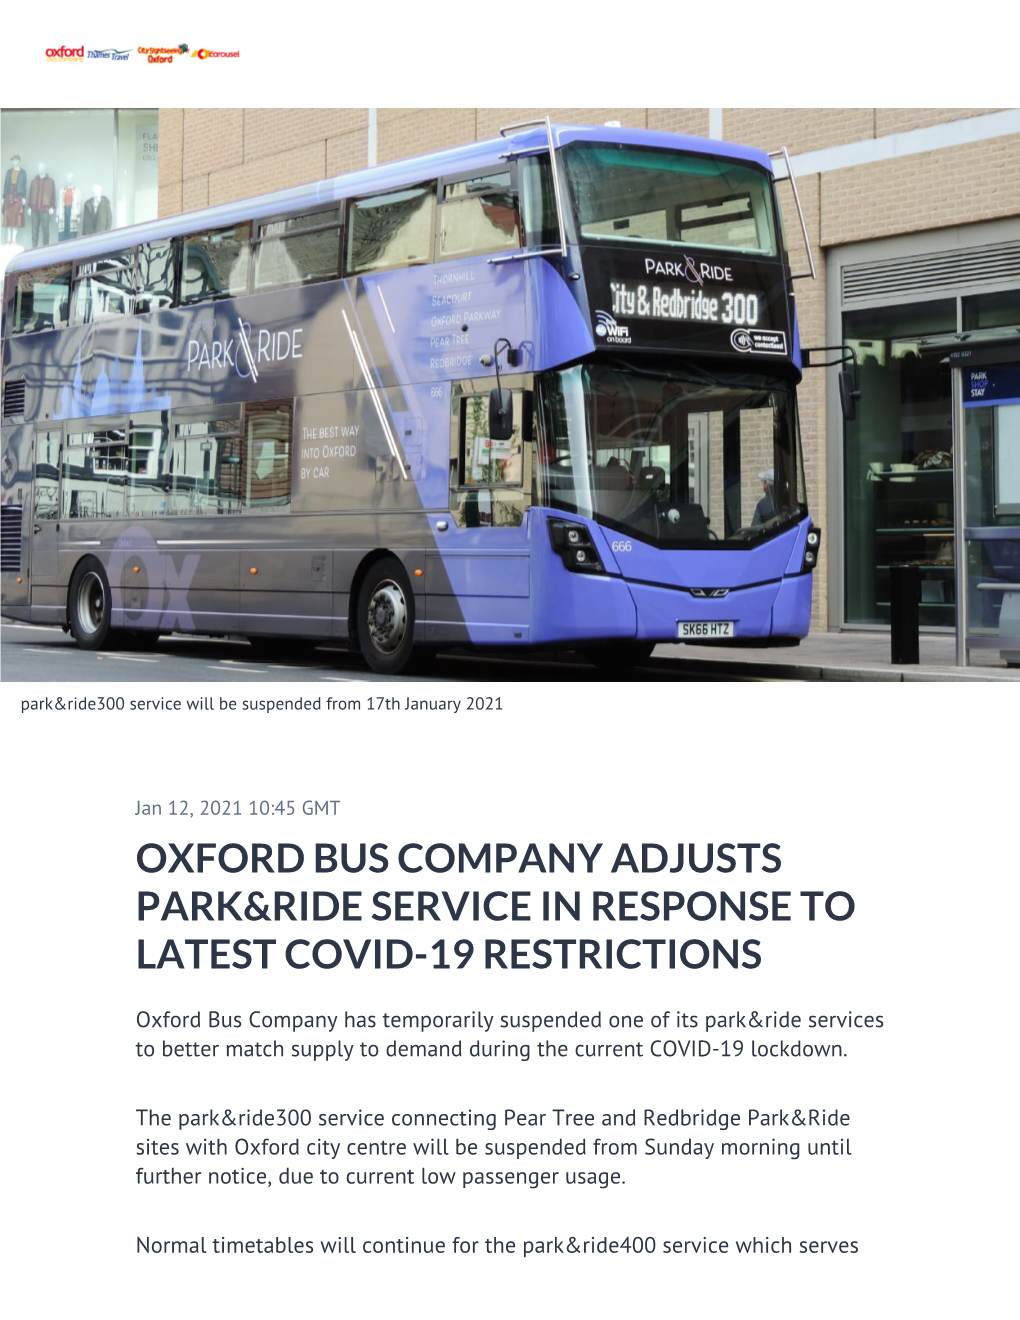 Oxford Bus Company Adjusts Park&Ride Service In